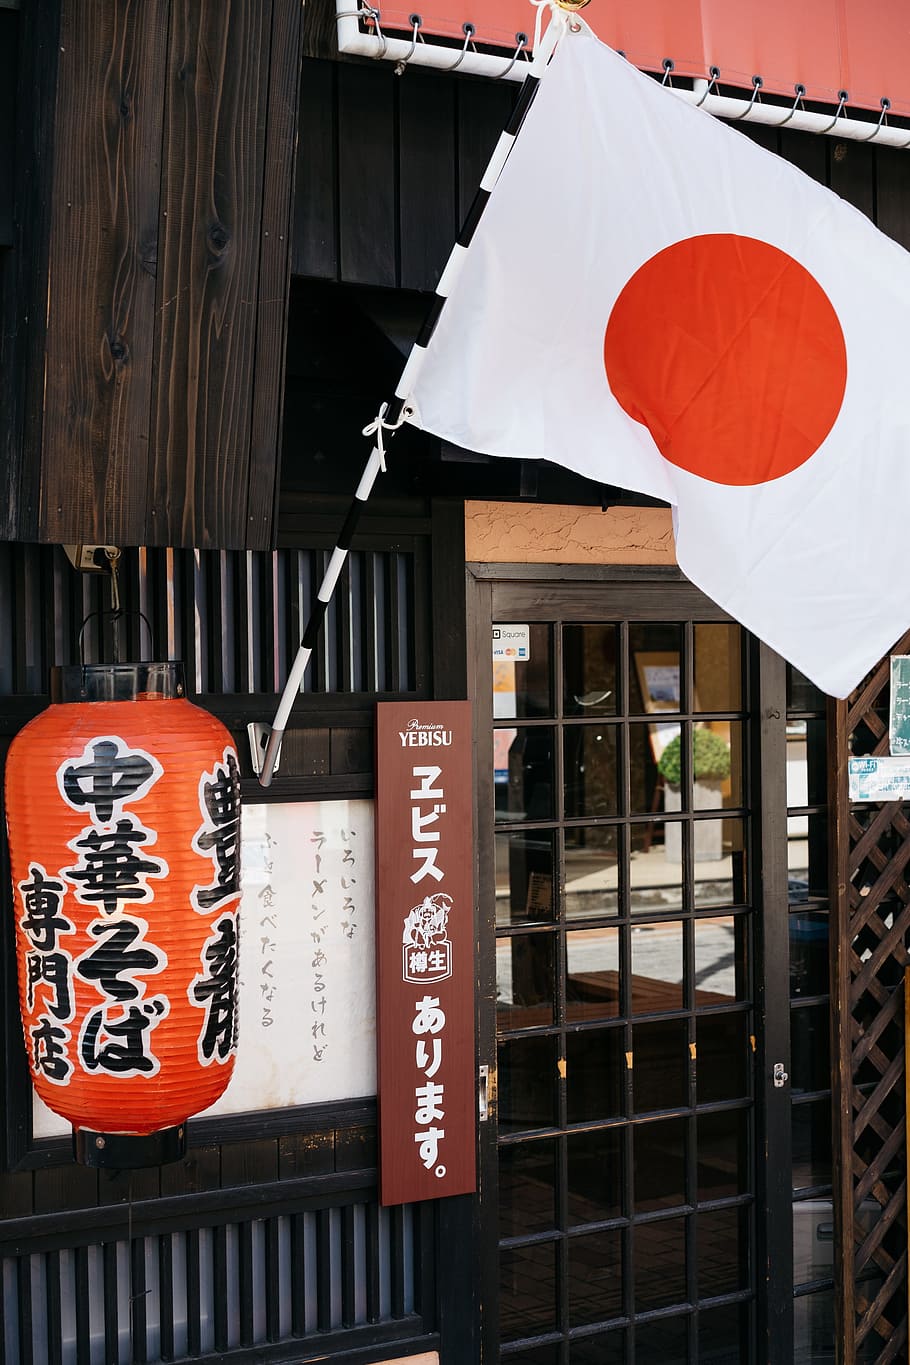 flag of Japan on store, heritage, door, lantern, restaurant, entrance